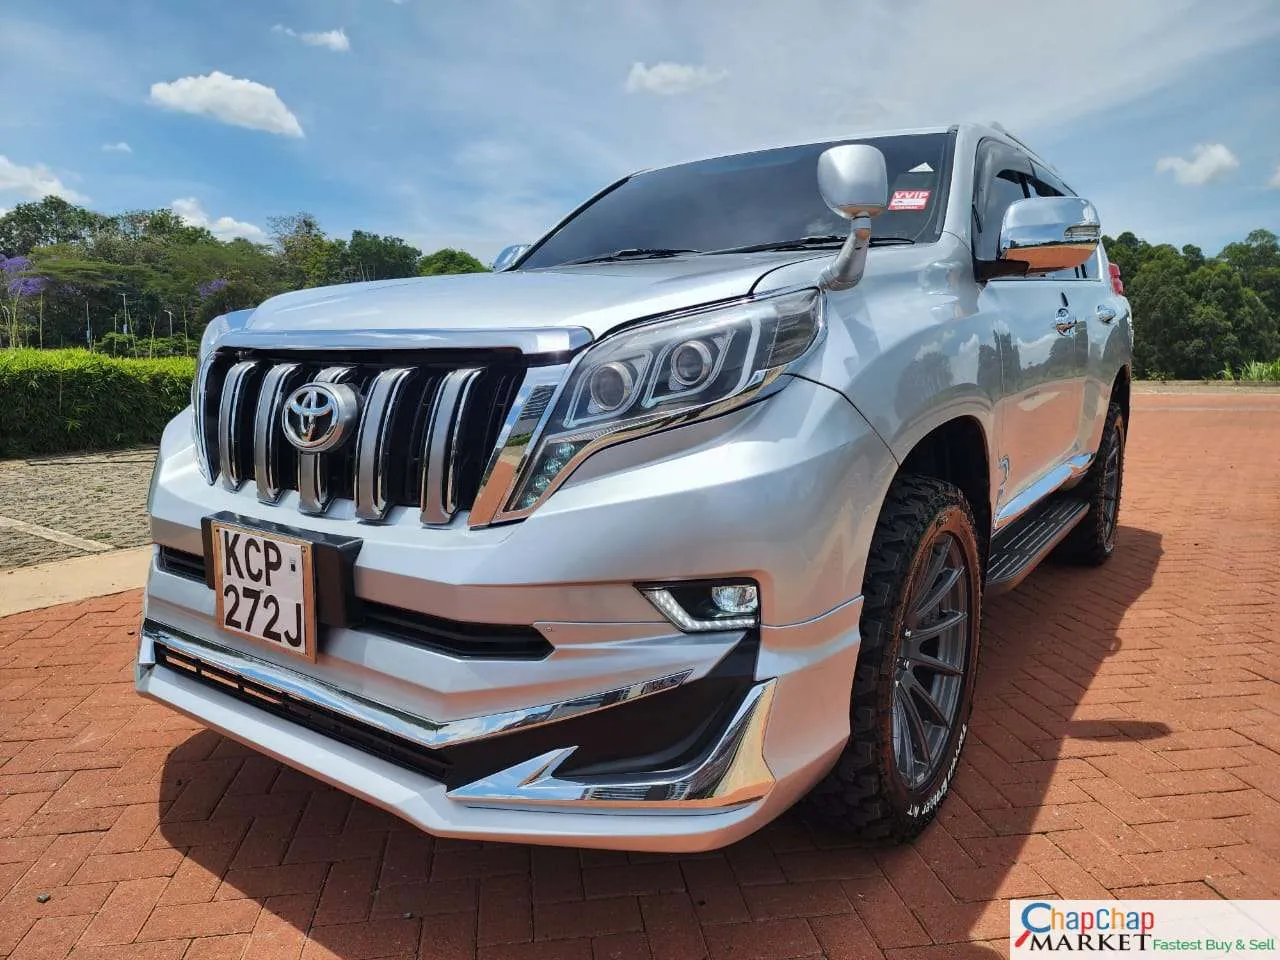 Toyota Prado j150 for sale in kenya hire purchase installments QUICK SALE You Pay 30% Deposit Trade in OK Prado j150 Kenya facelift